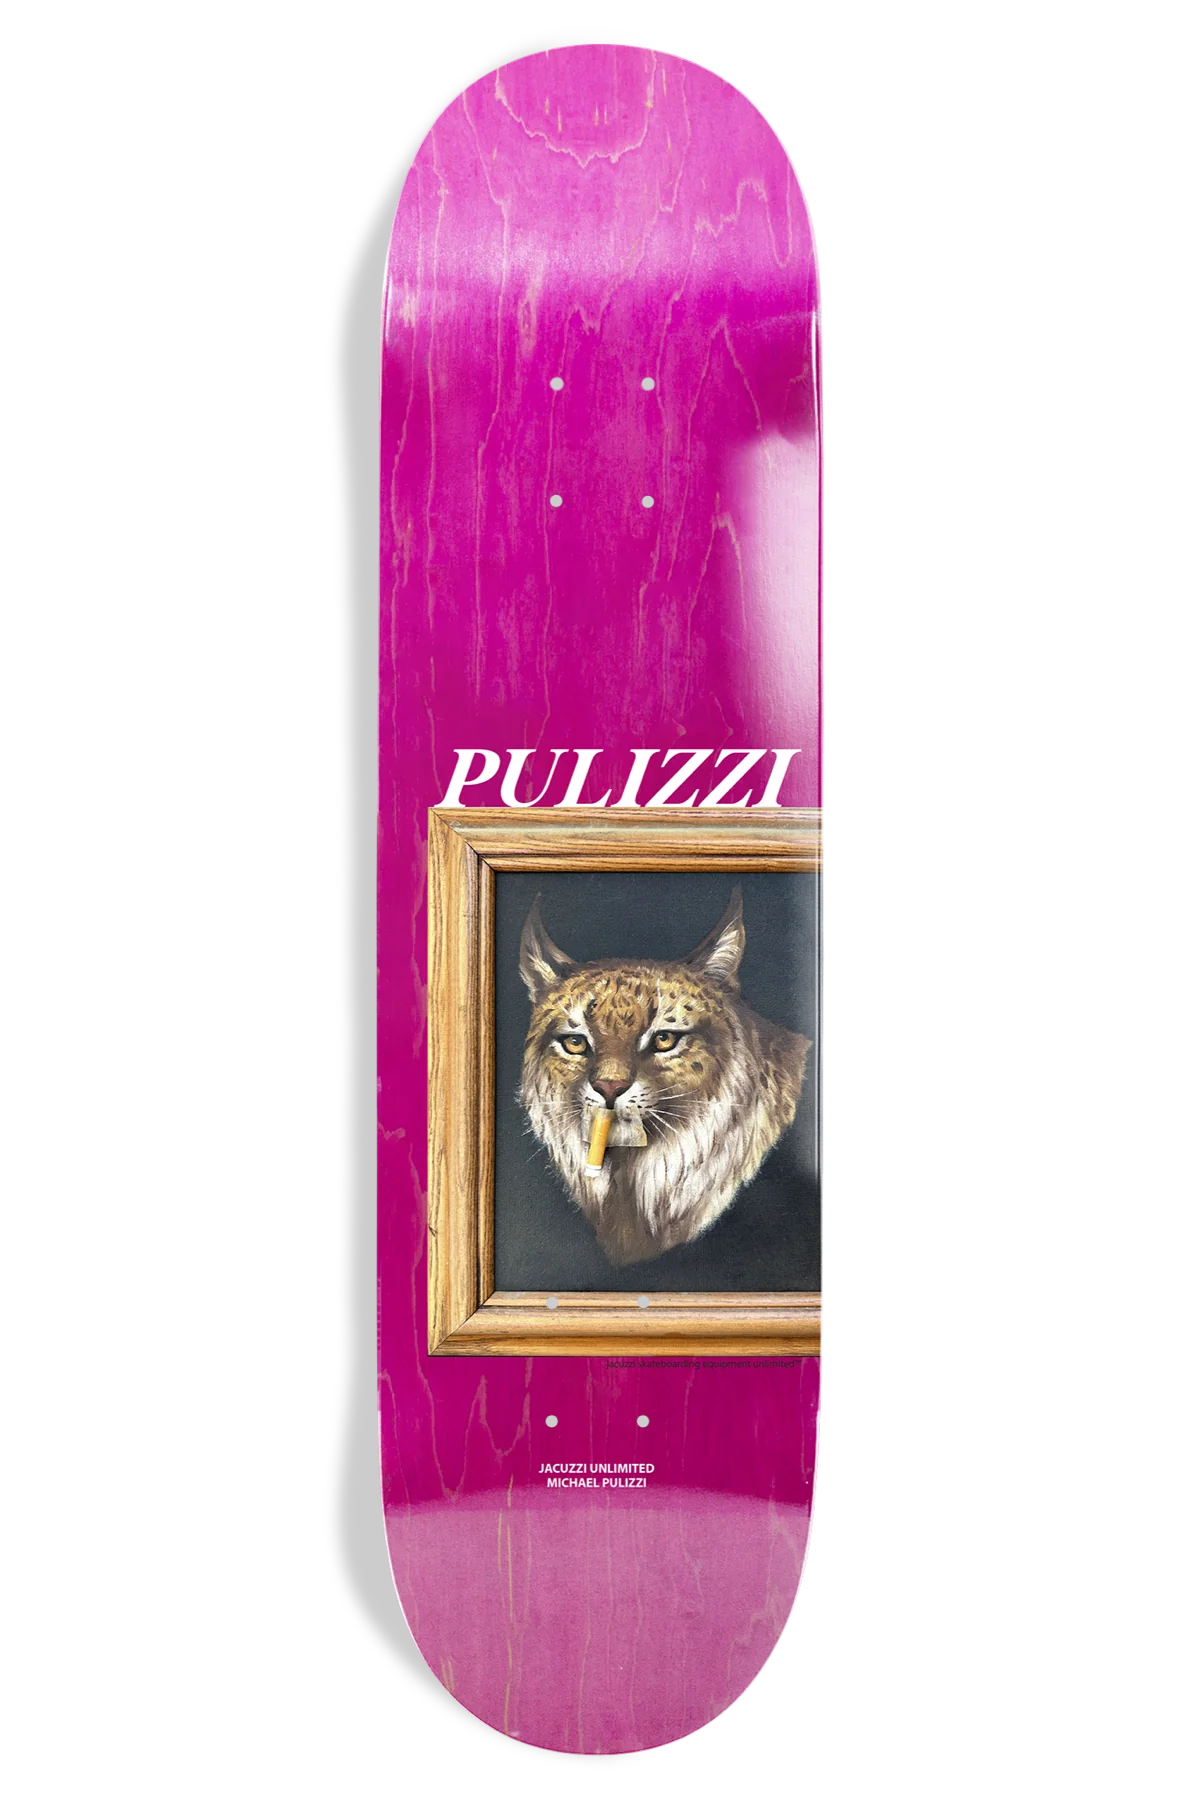 Jacuzzi Michael Pulizzi Bobcat 8.375" Skateboard Deck